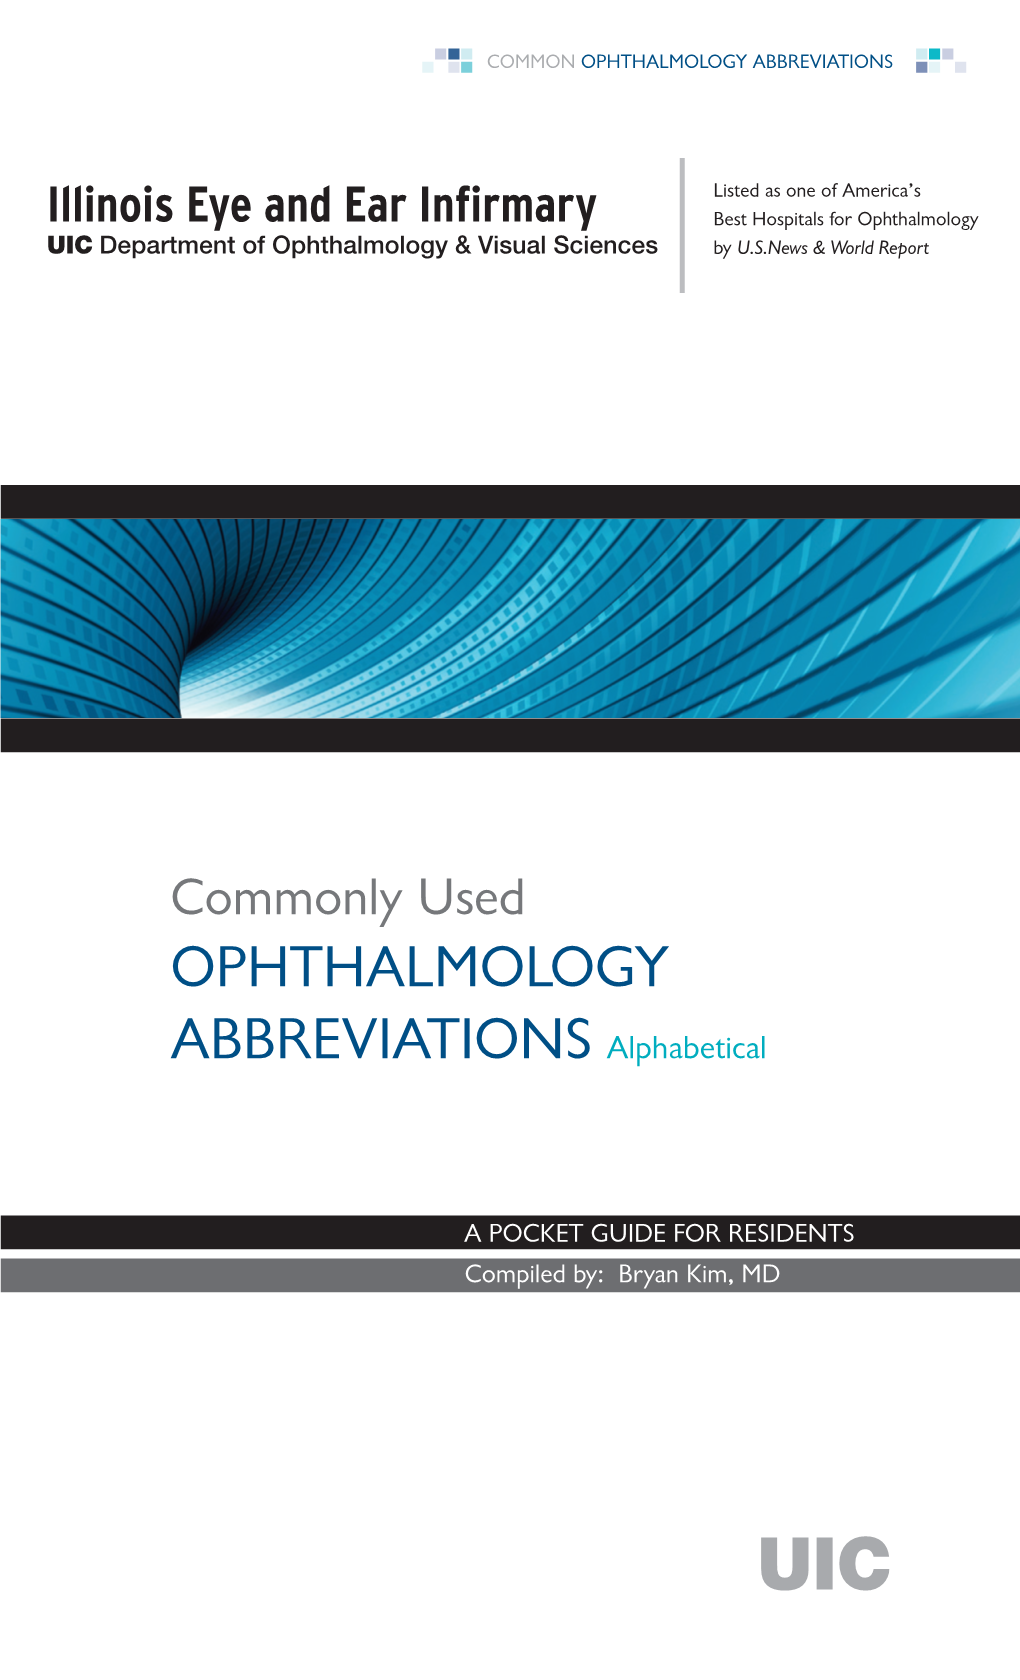 Ophthalmology Abbreviations Alphabetical